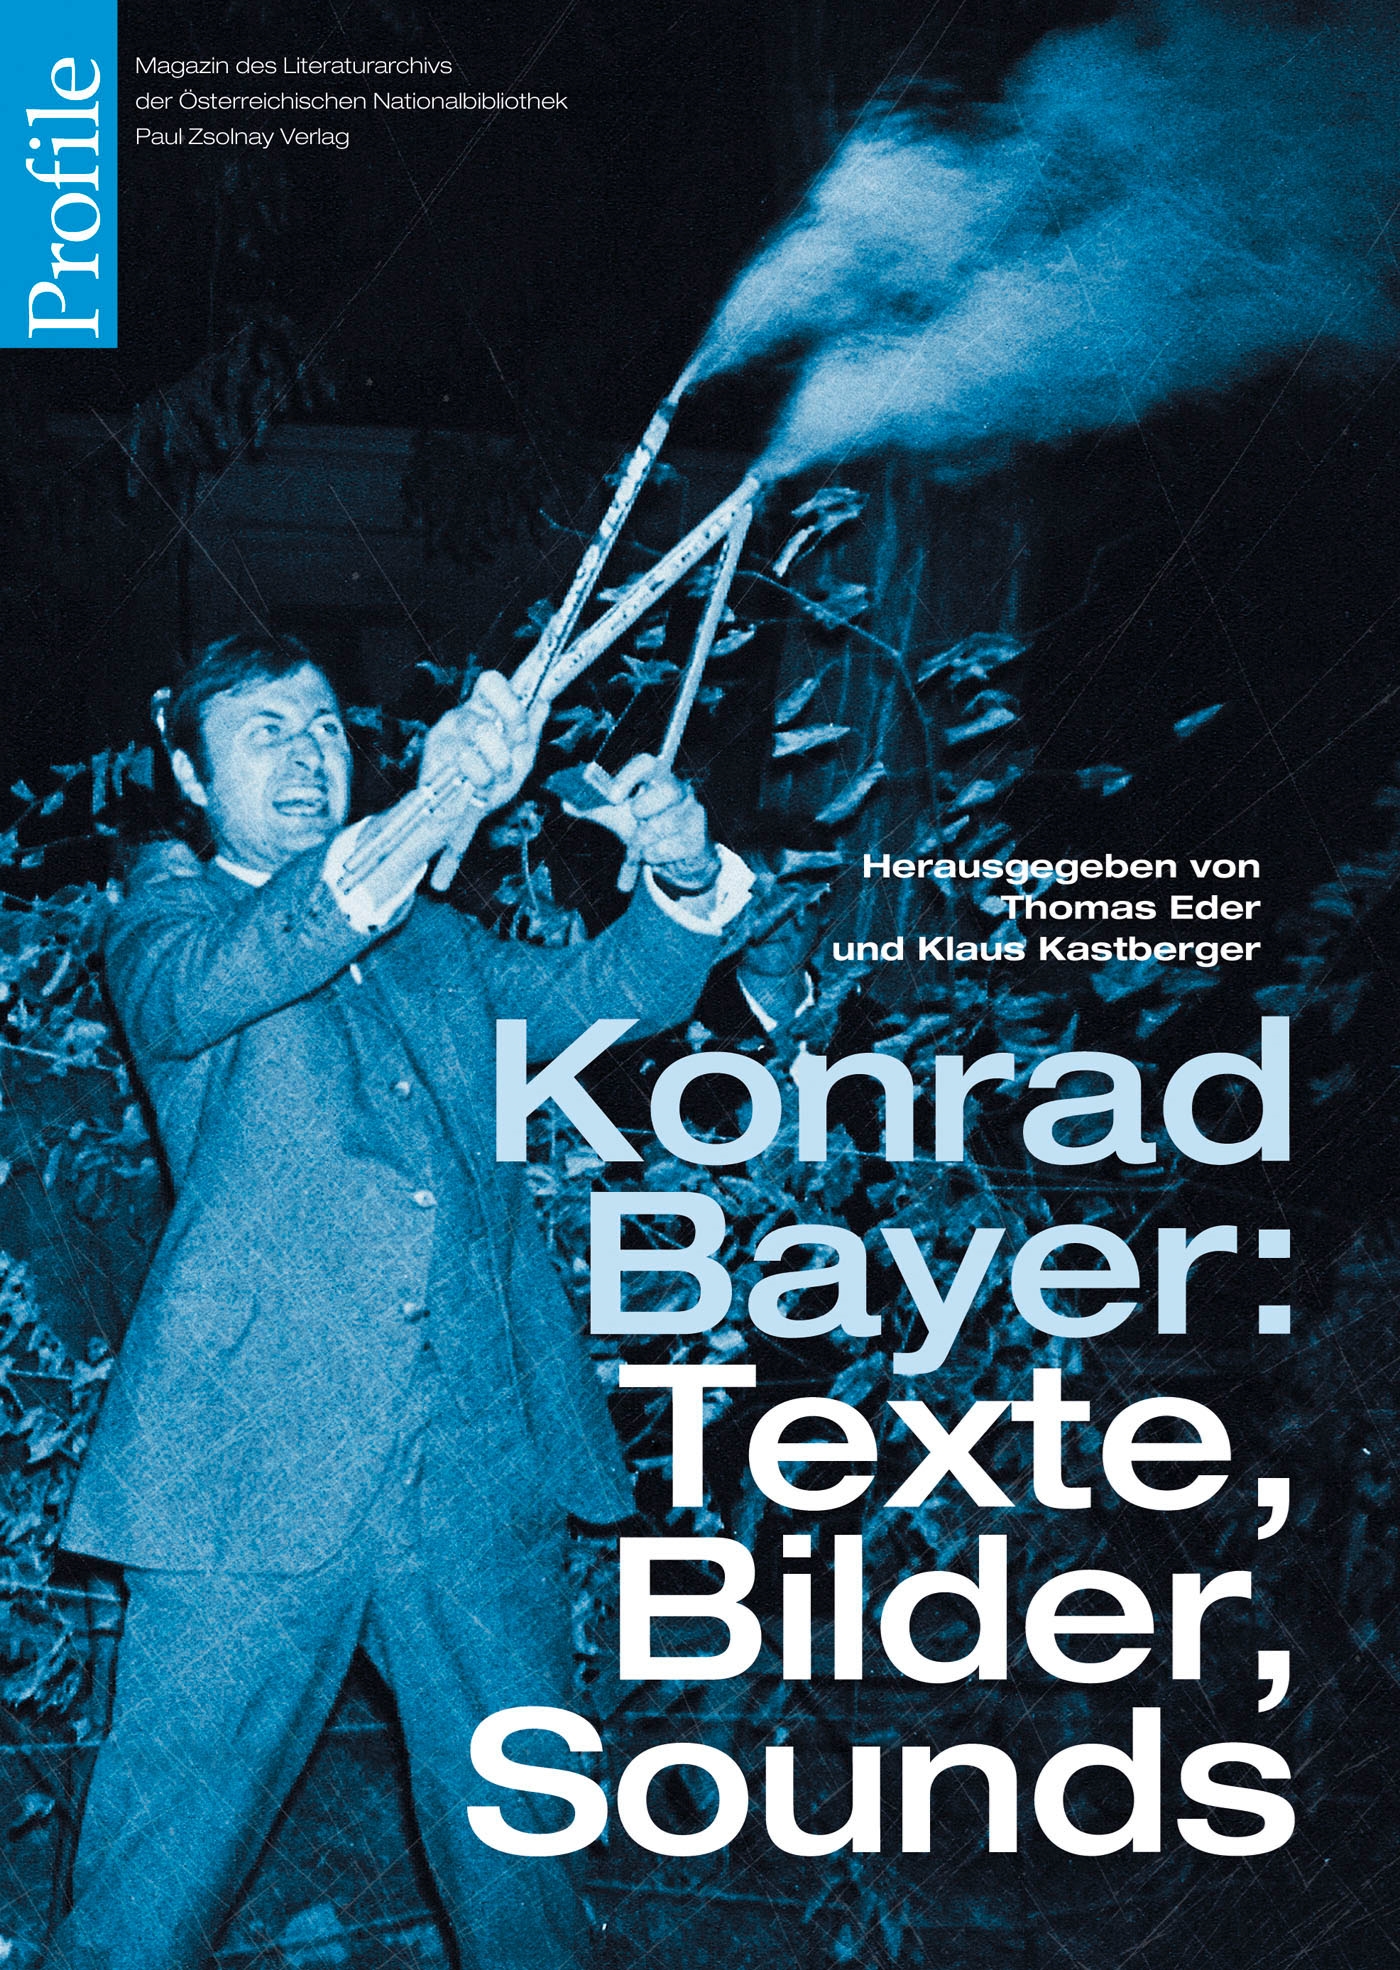 Konrad Bayer: Texte, Bilder, Sounds